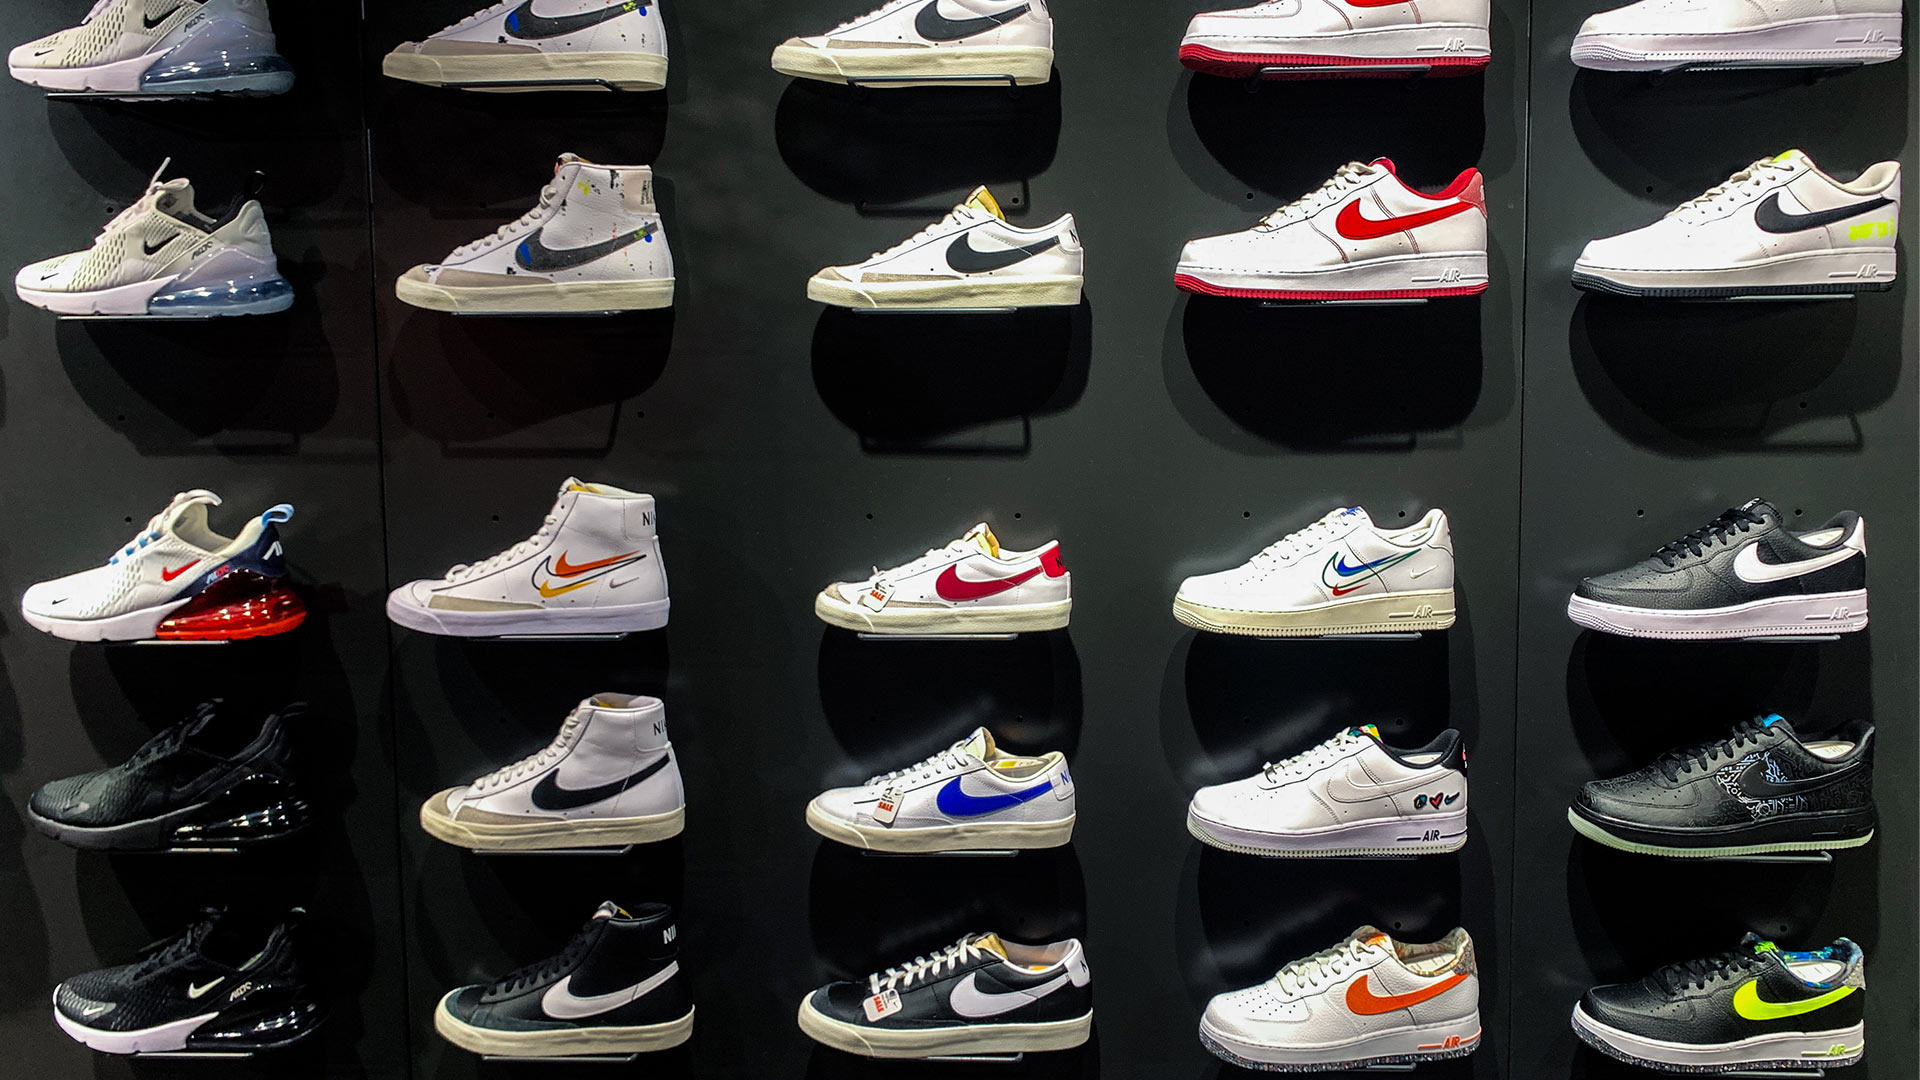 Nike Schuhe | picture alliance / NurPhoto